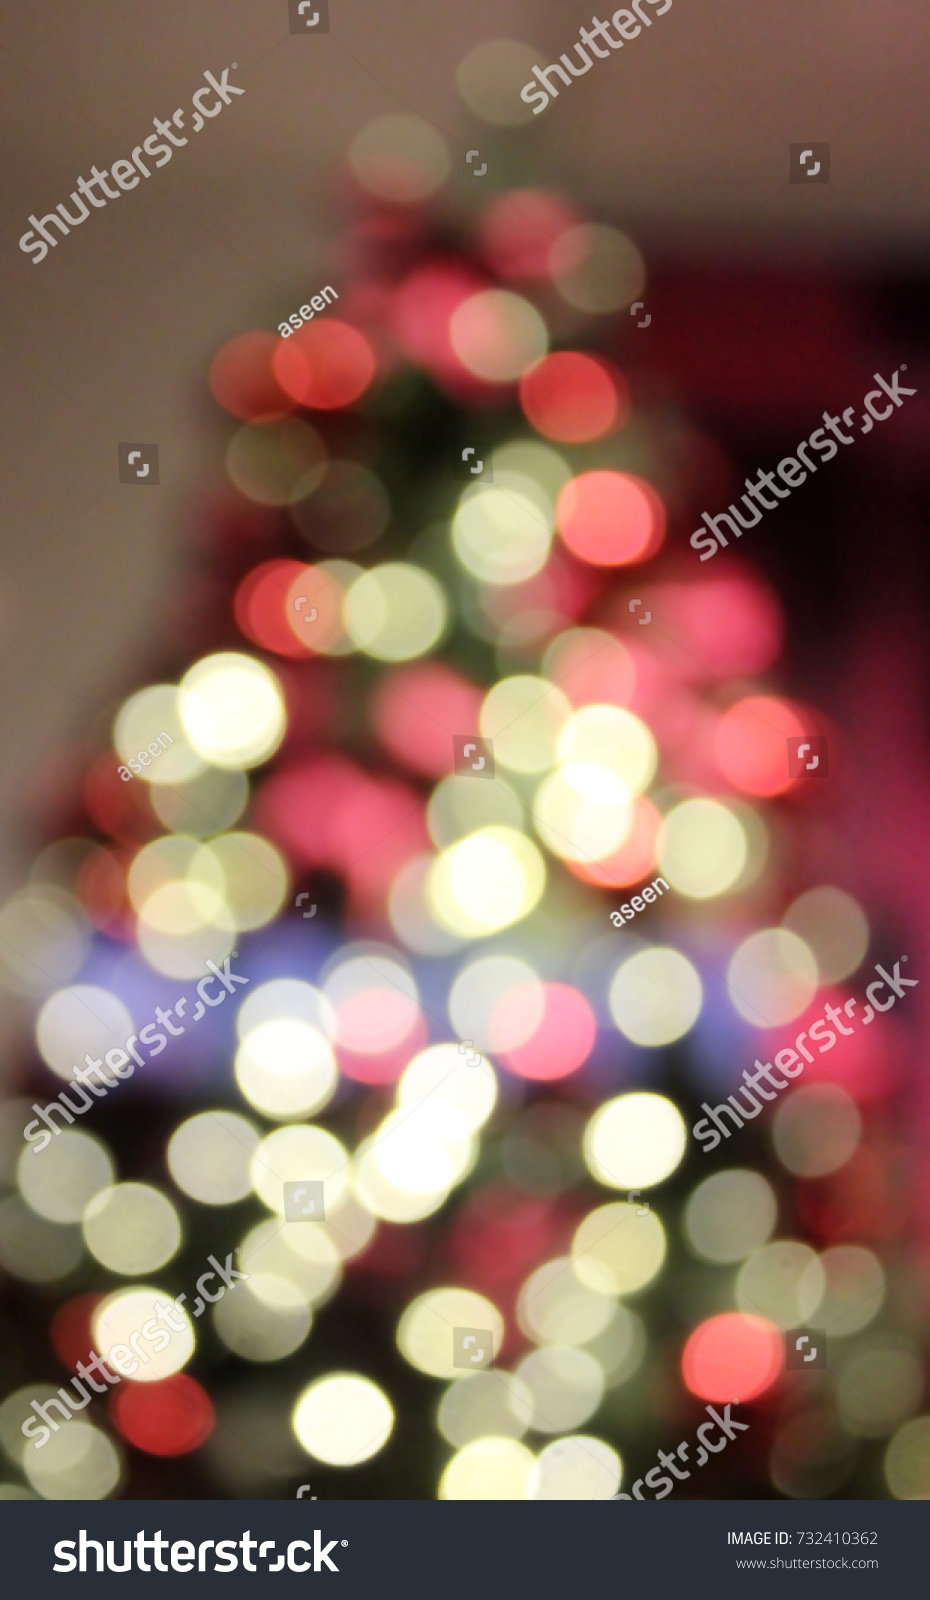 Christmas tree #732410362